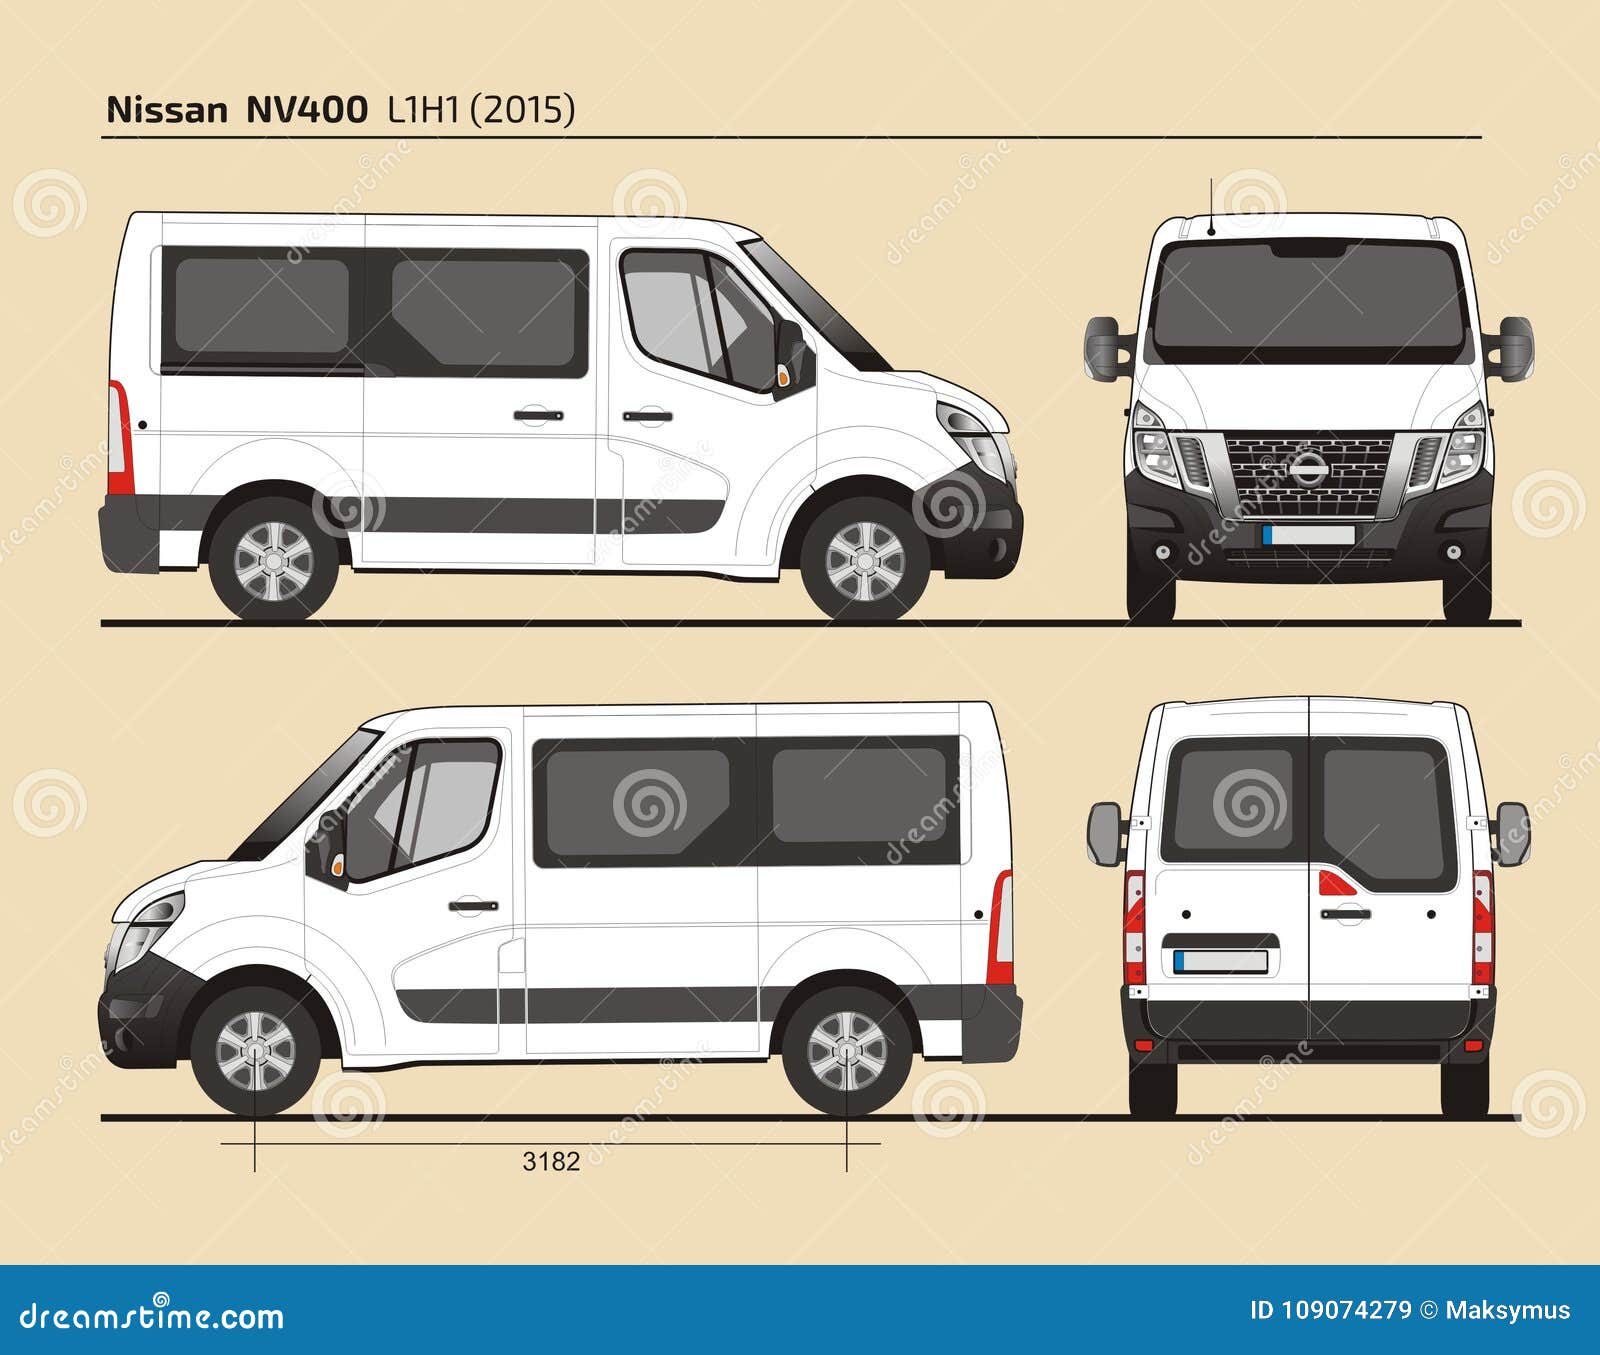 Nissan NV400 Passenger Van L1H1 2015 